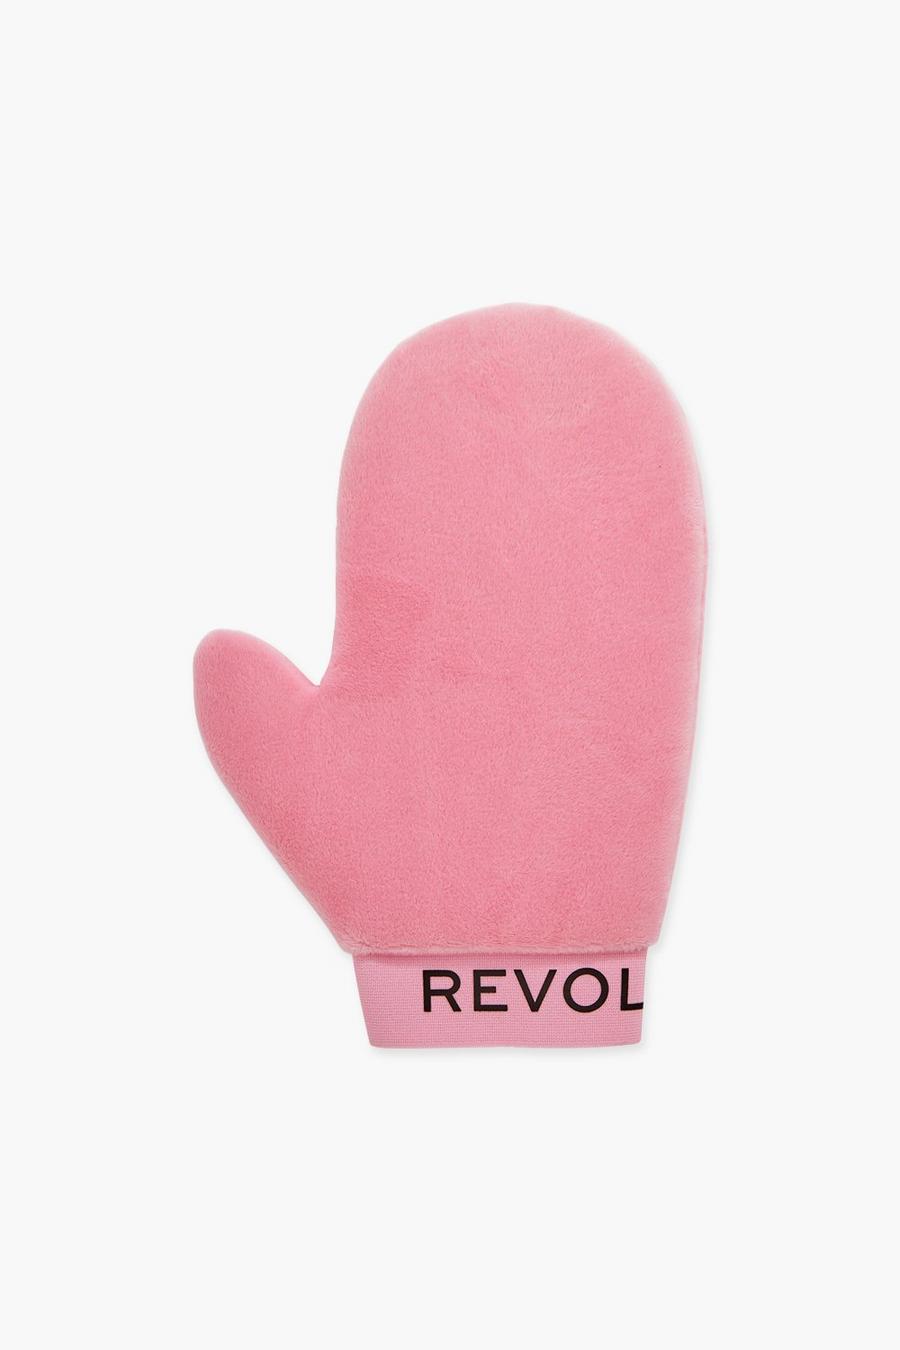 Revolution Beauty - Guanto abbronzante rosa, Pink